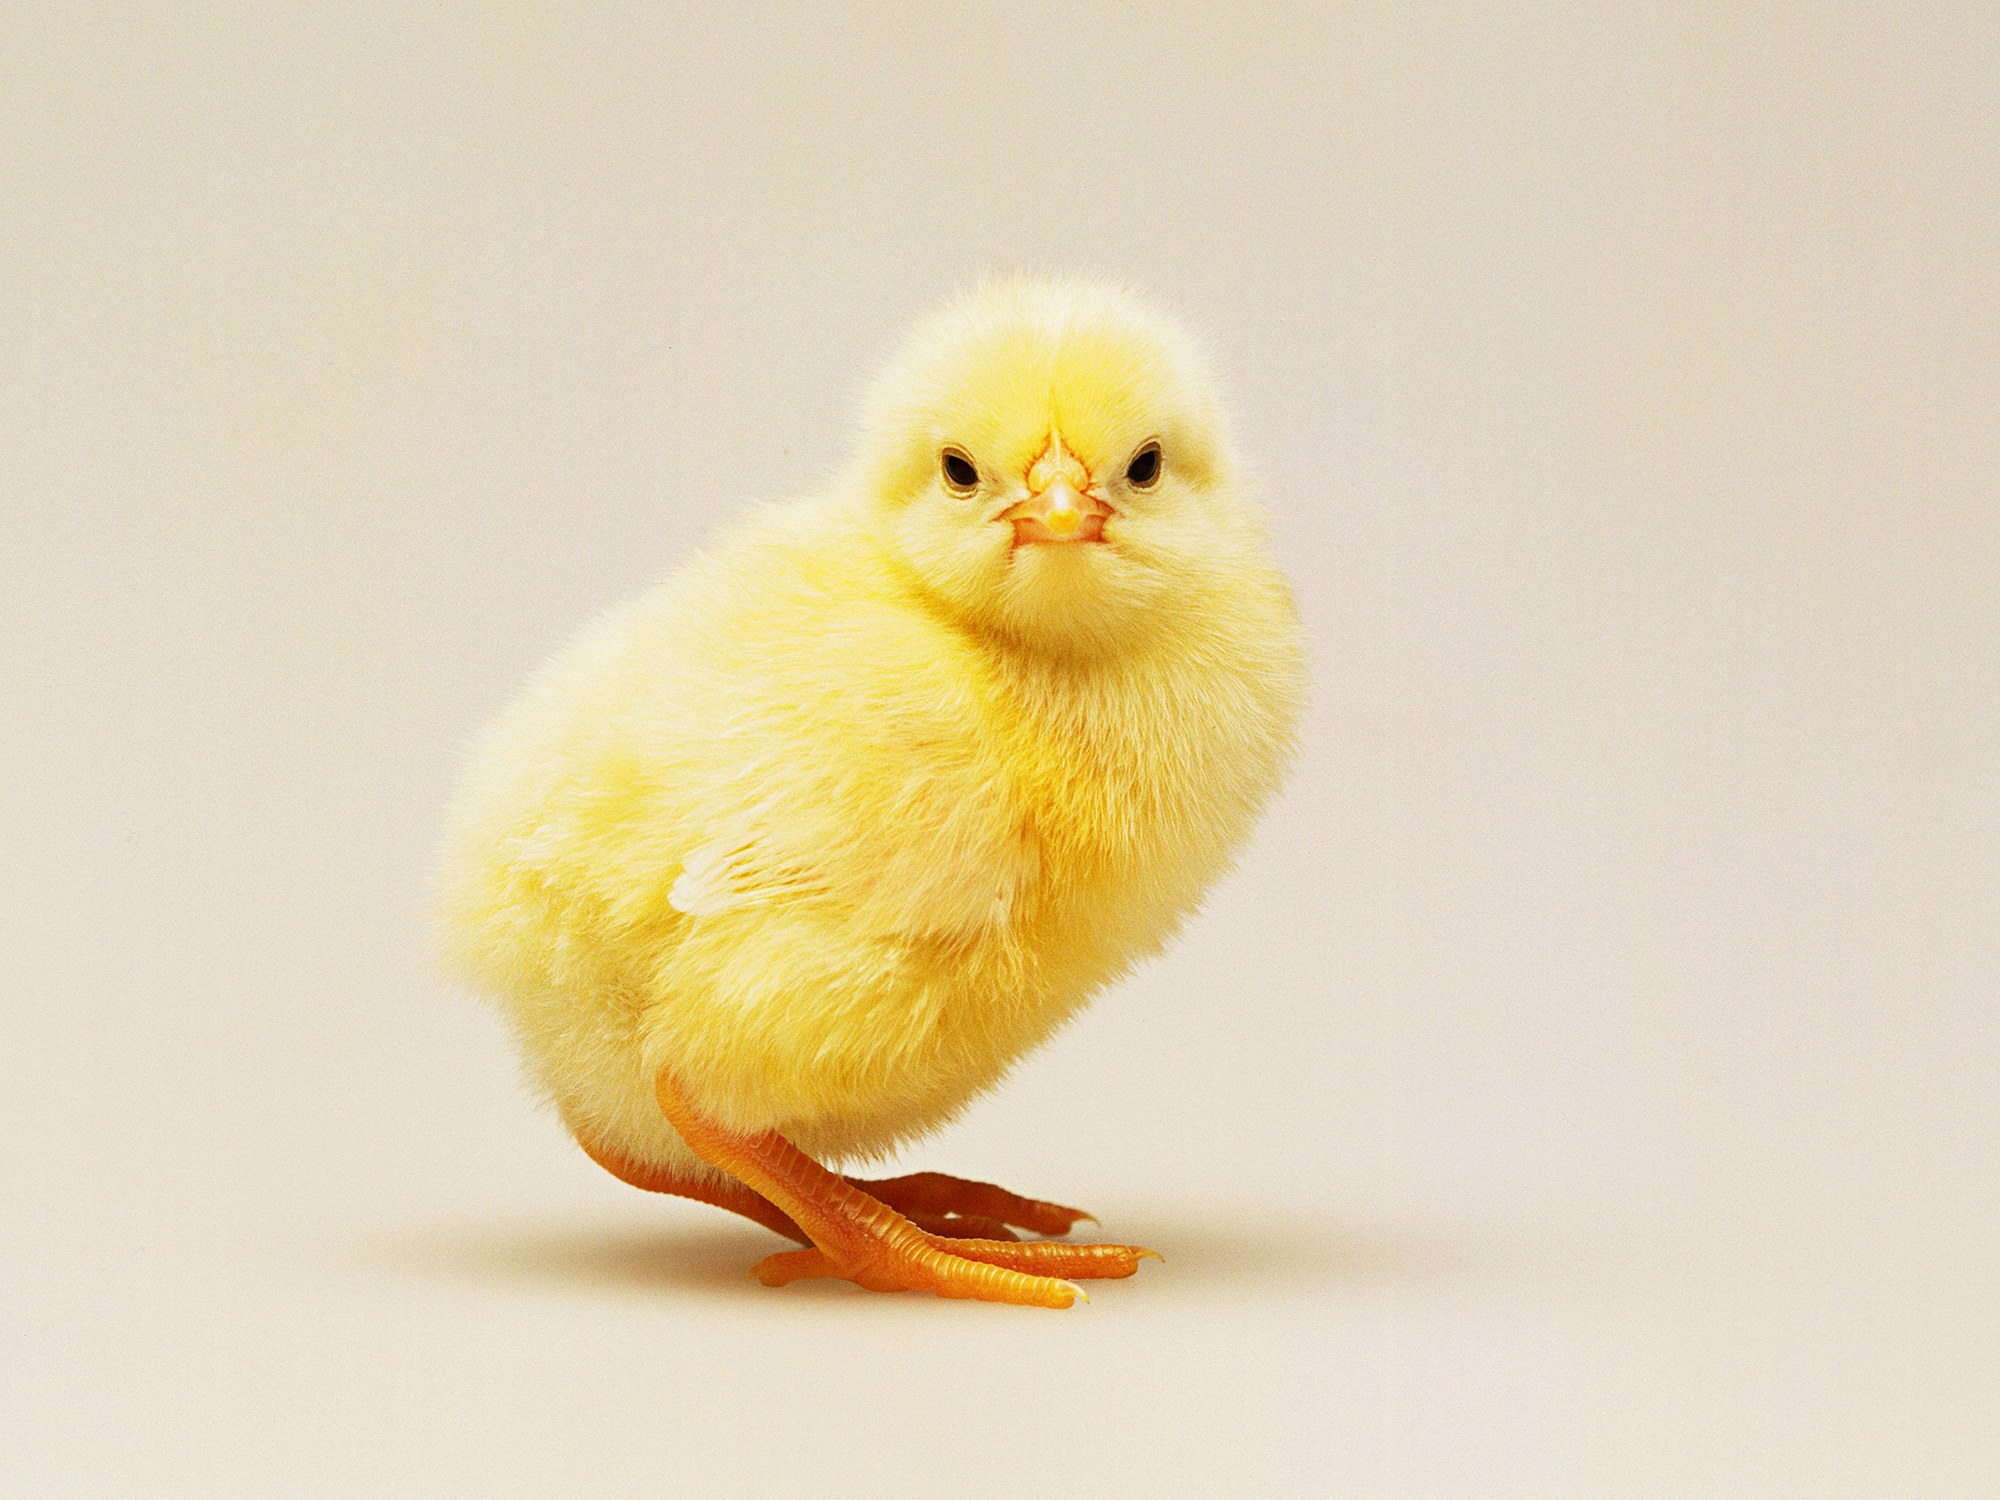 Chick chick